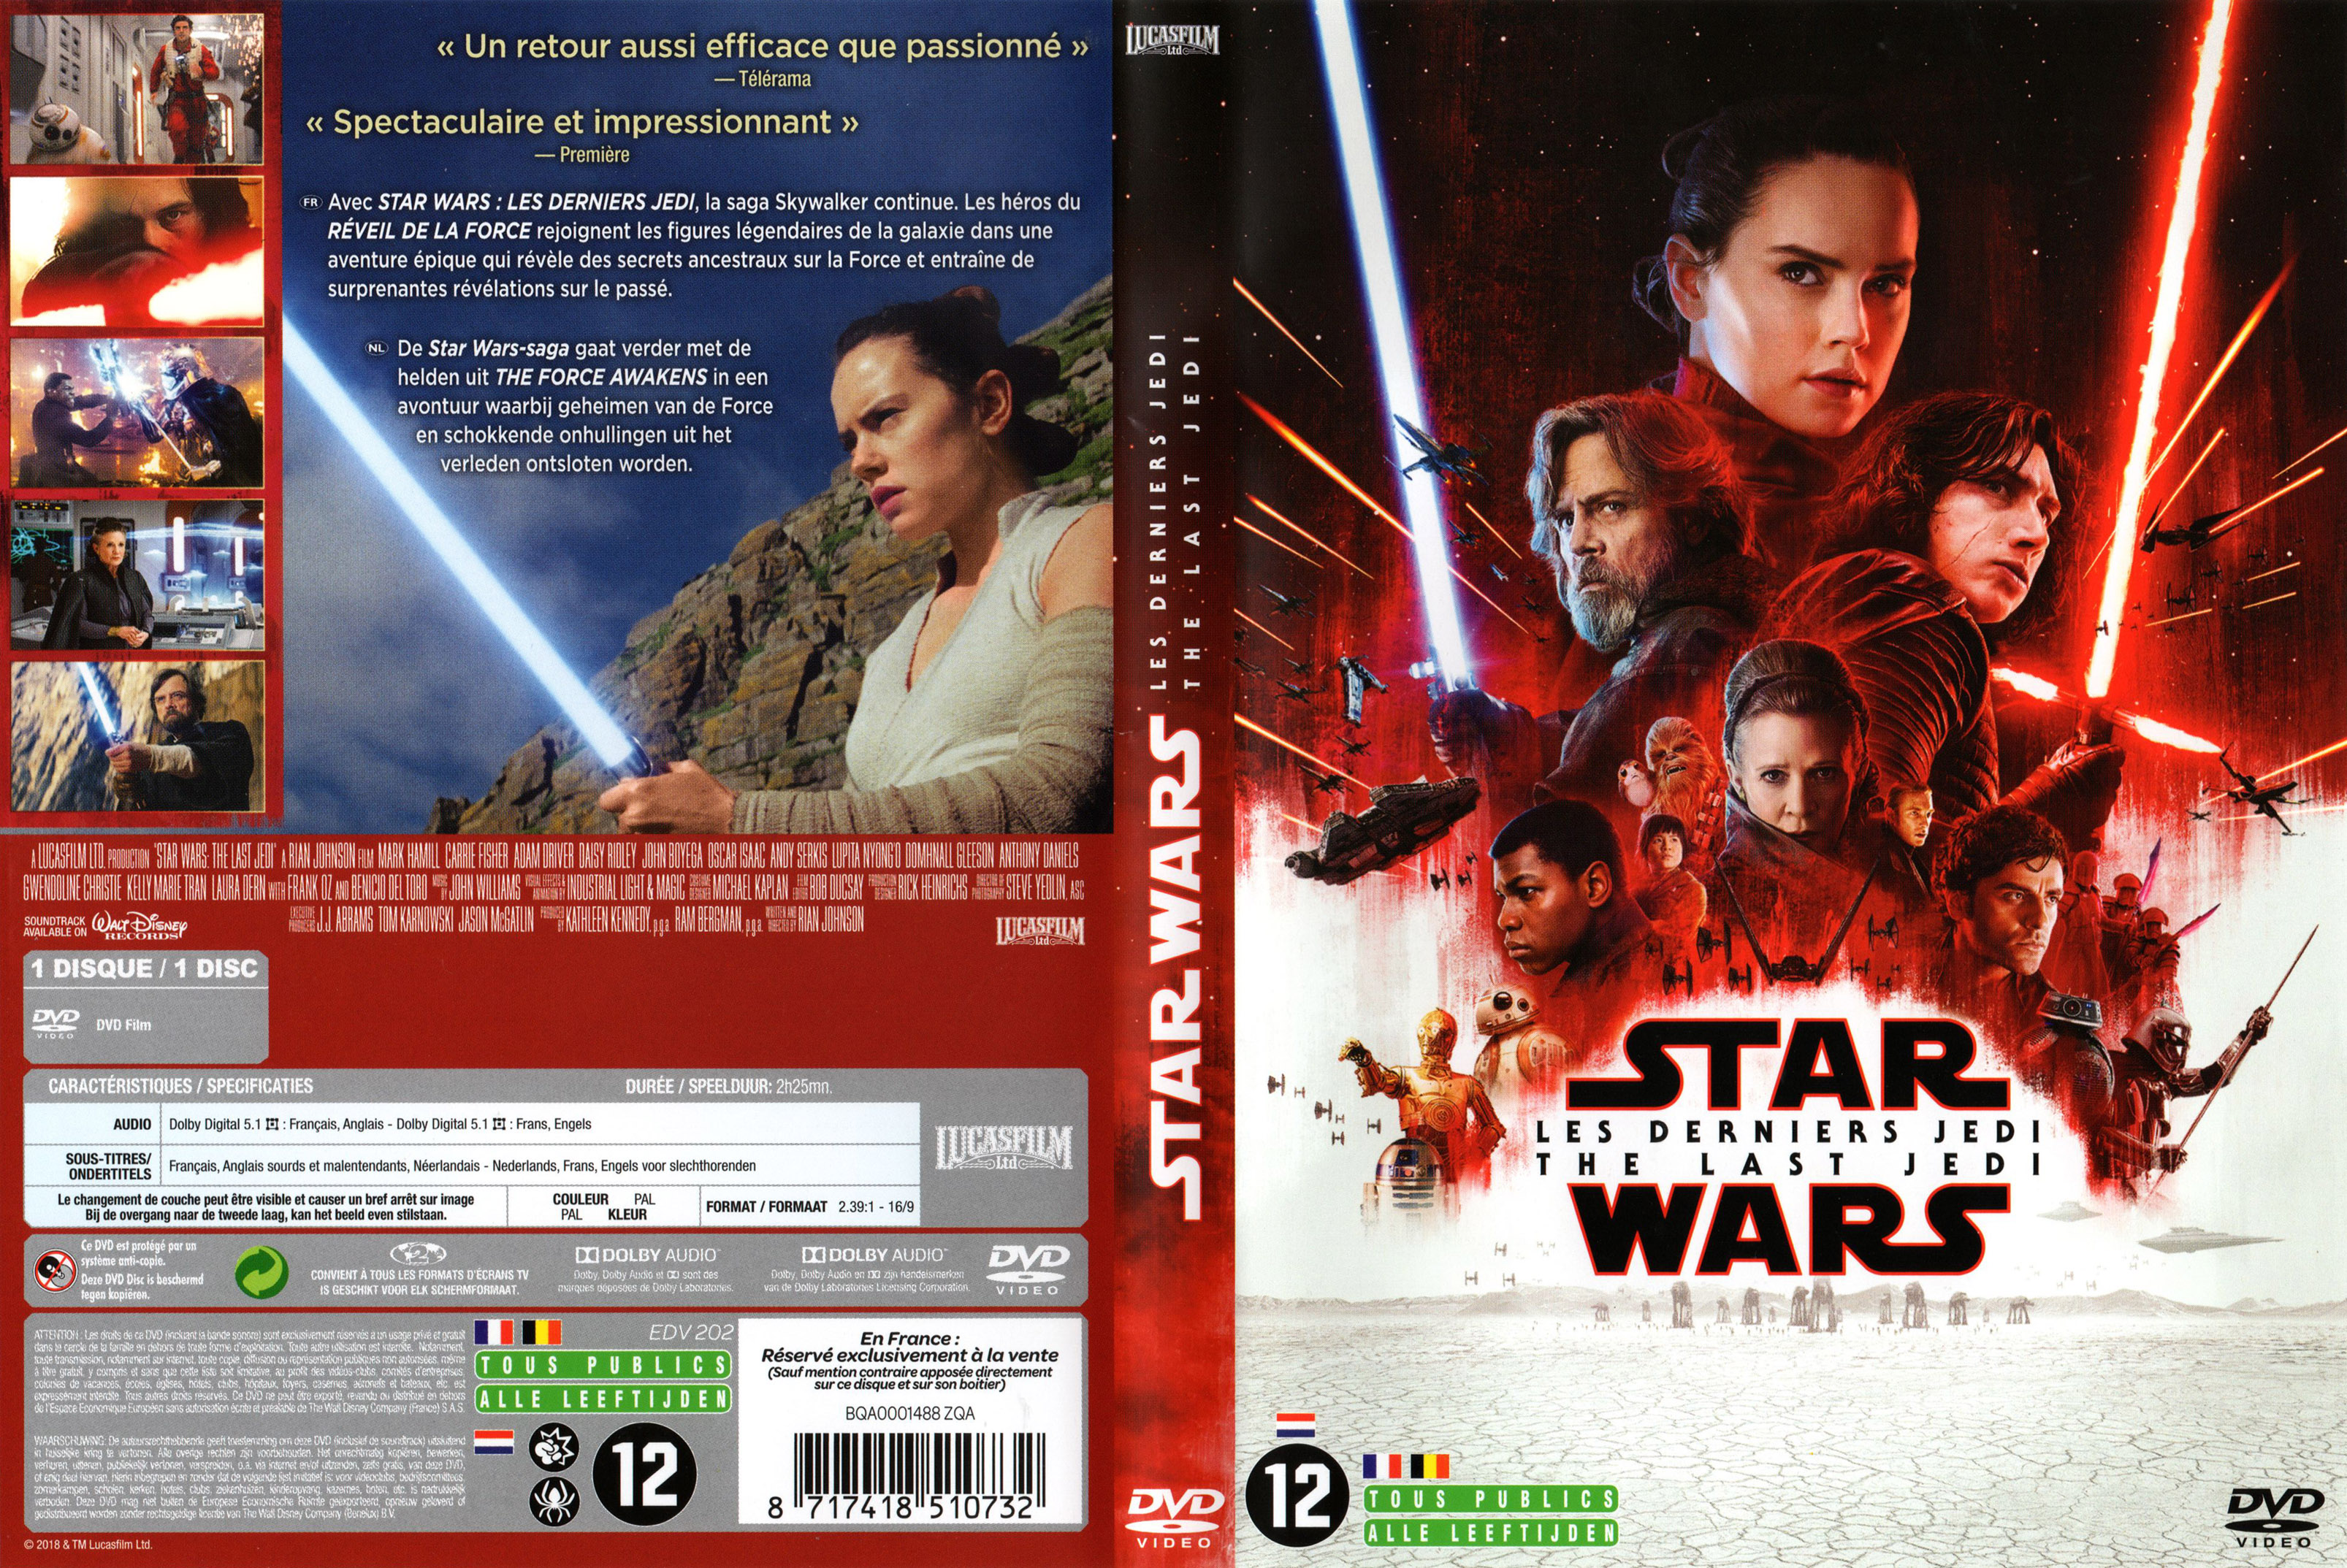 Jaquette DVD Star Wars VIII Les derniers Jedi